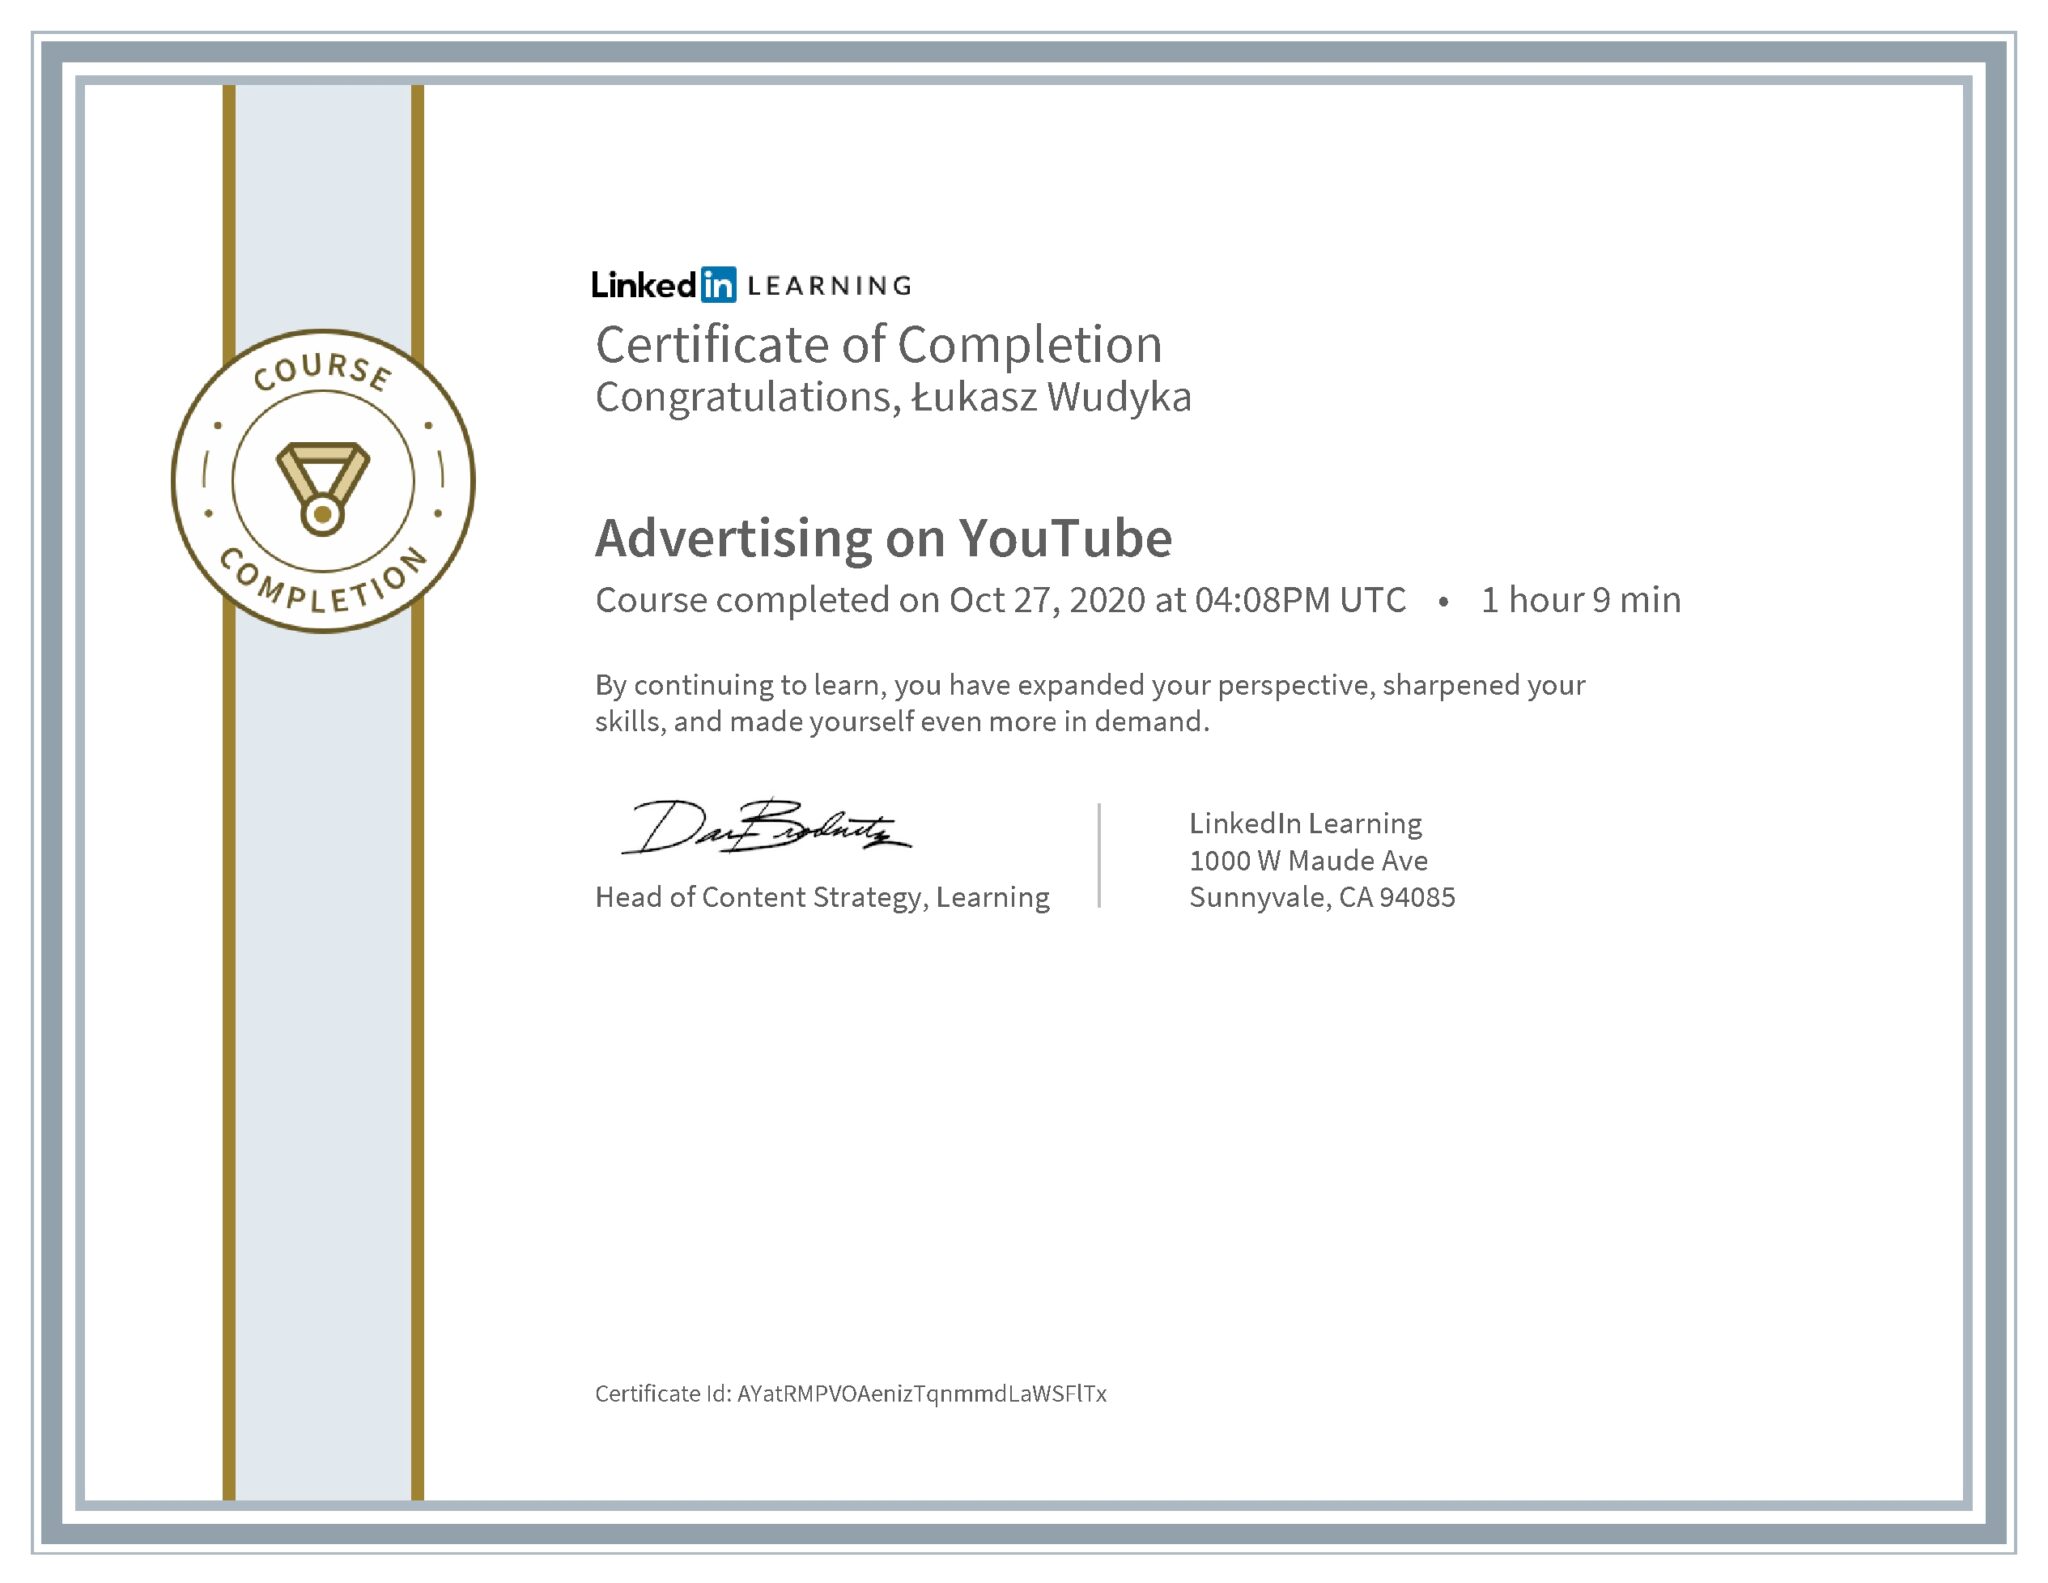 Łukasz Wudyka certyfikat LinkedIn Advertising on YouTube